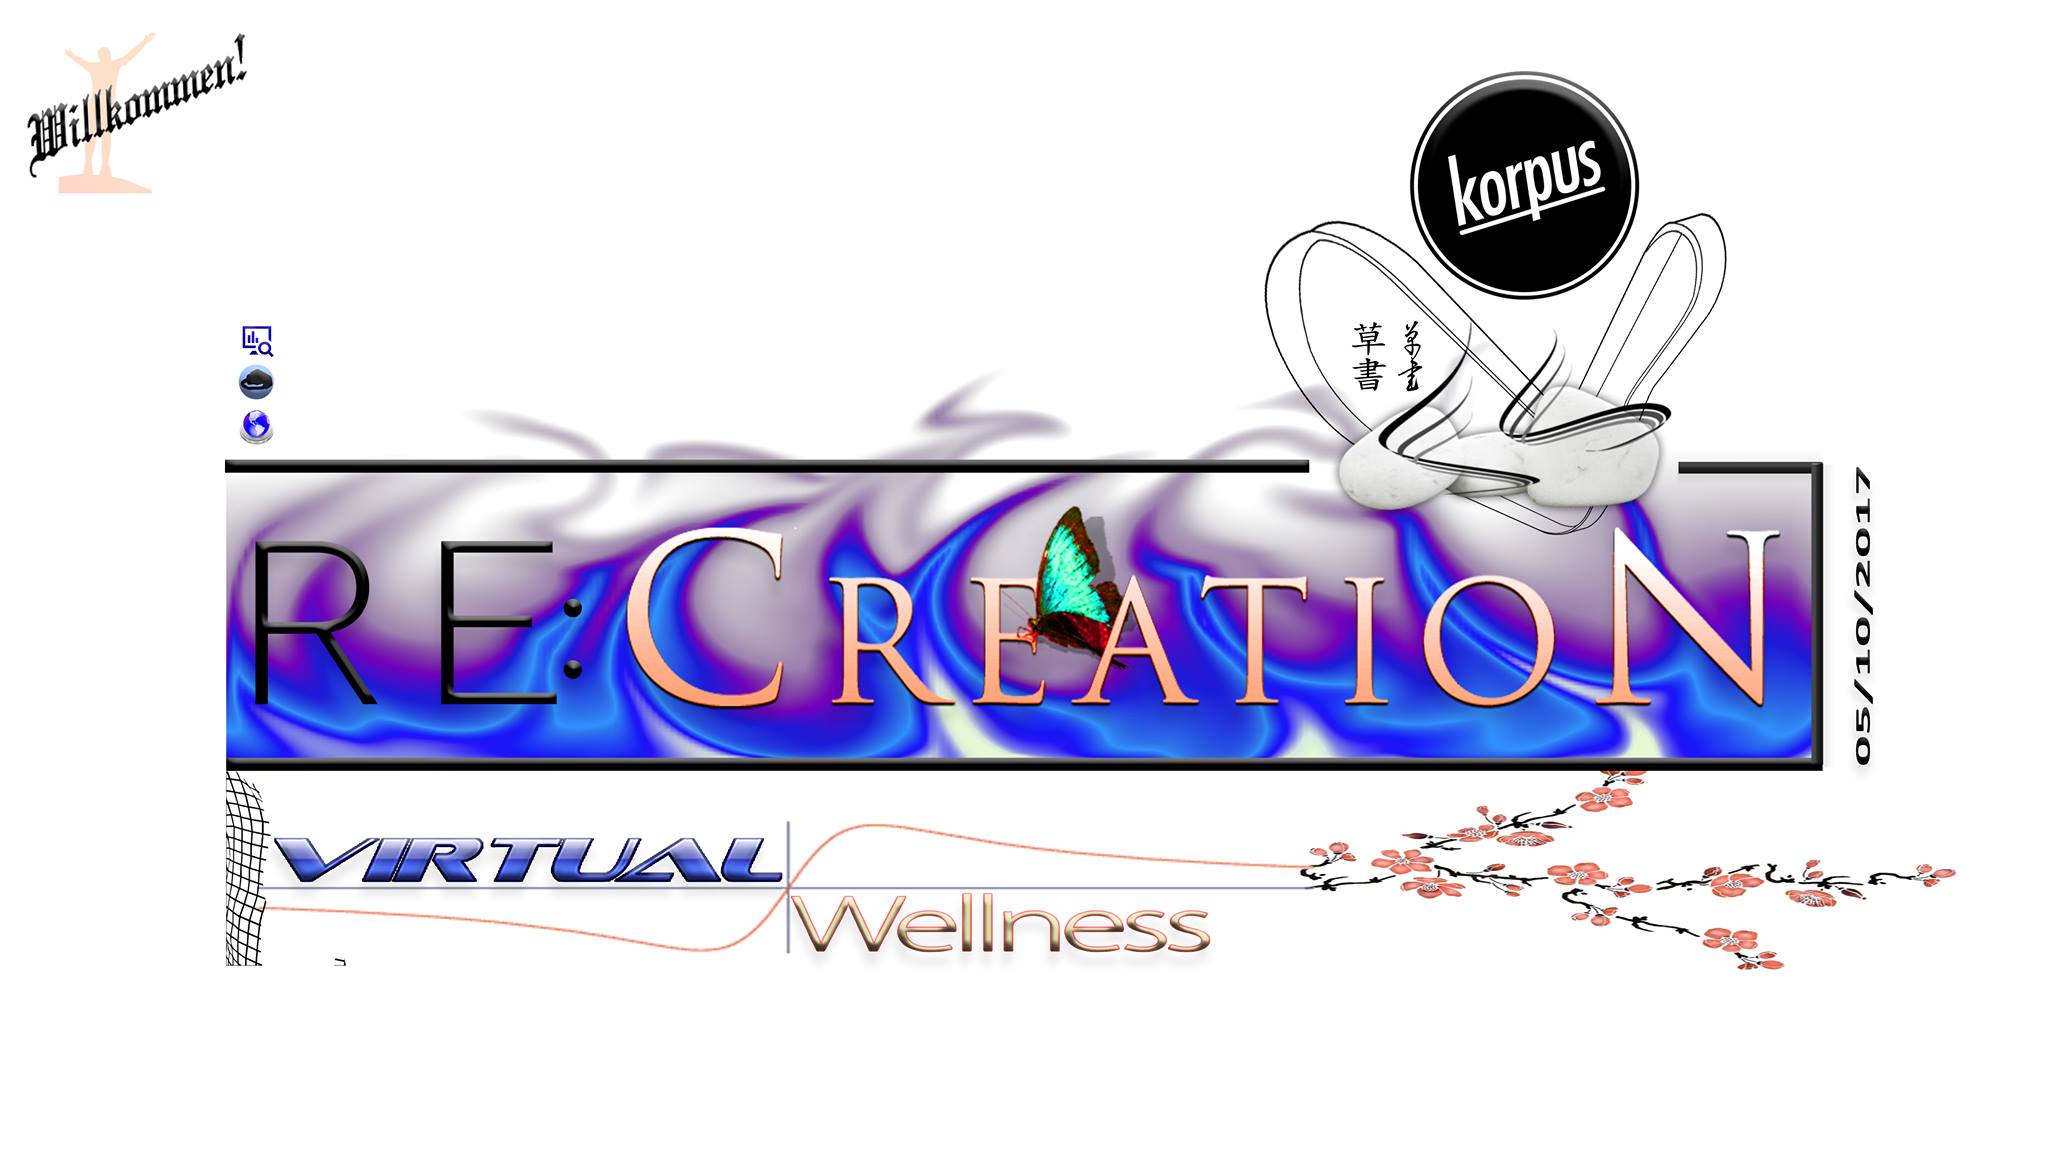 RE creation Virtual Wellness2